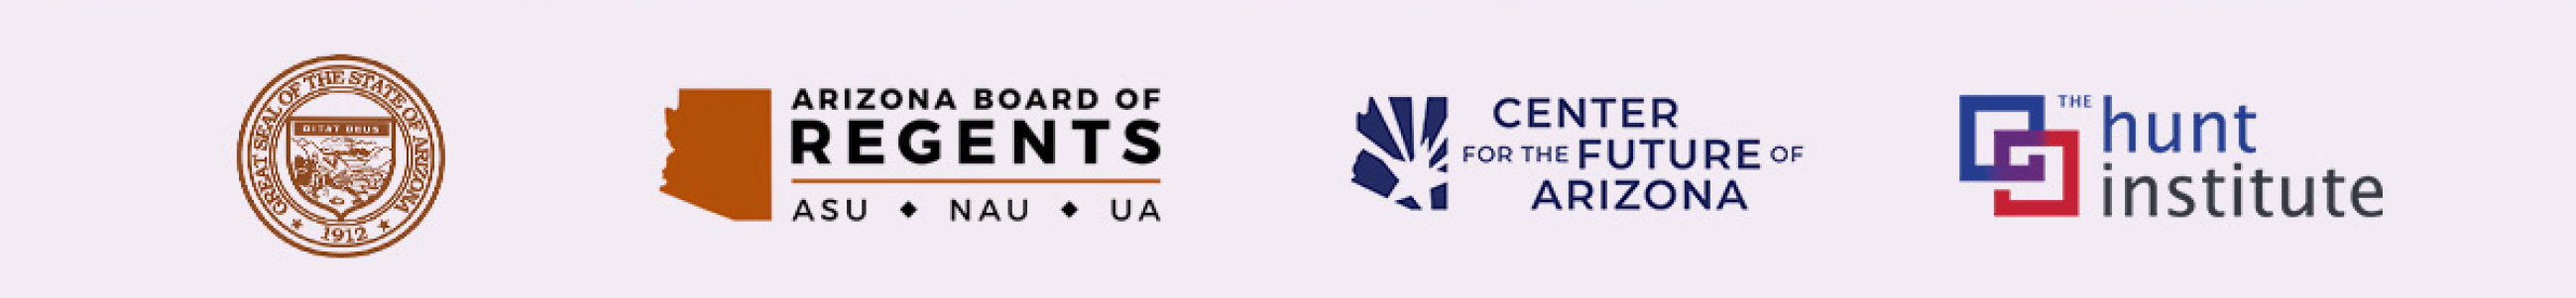 Arizona State, ABOR, CFA and Hunt Institute logos